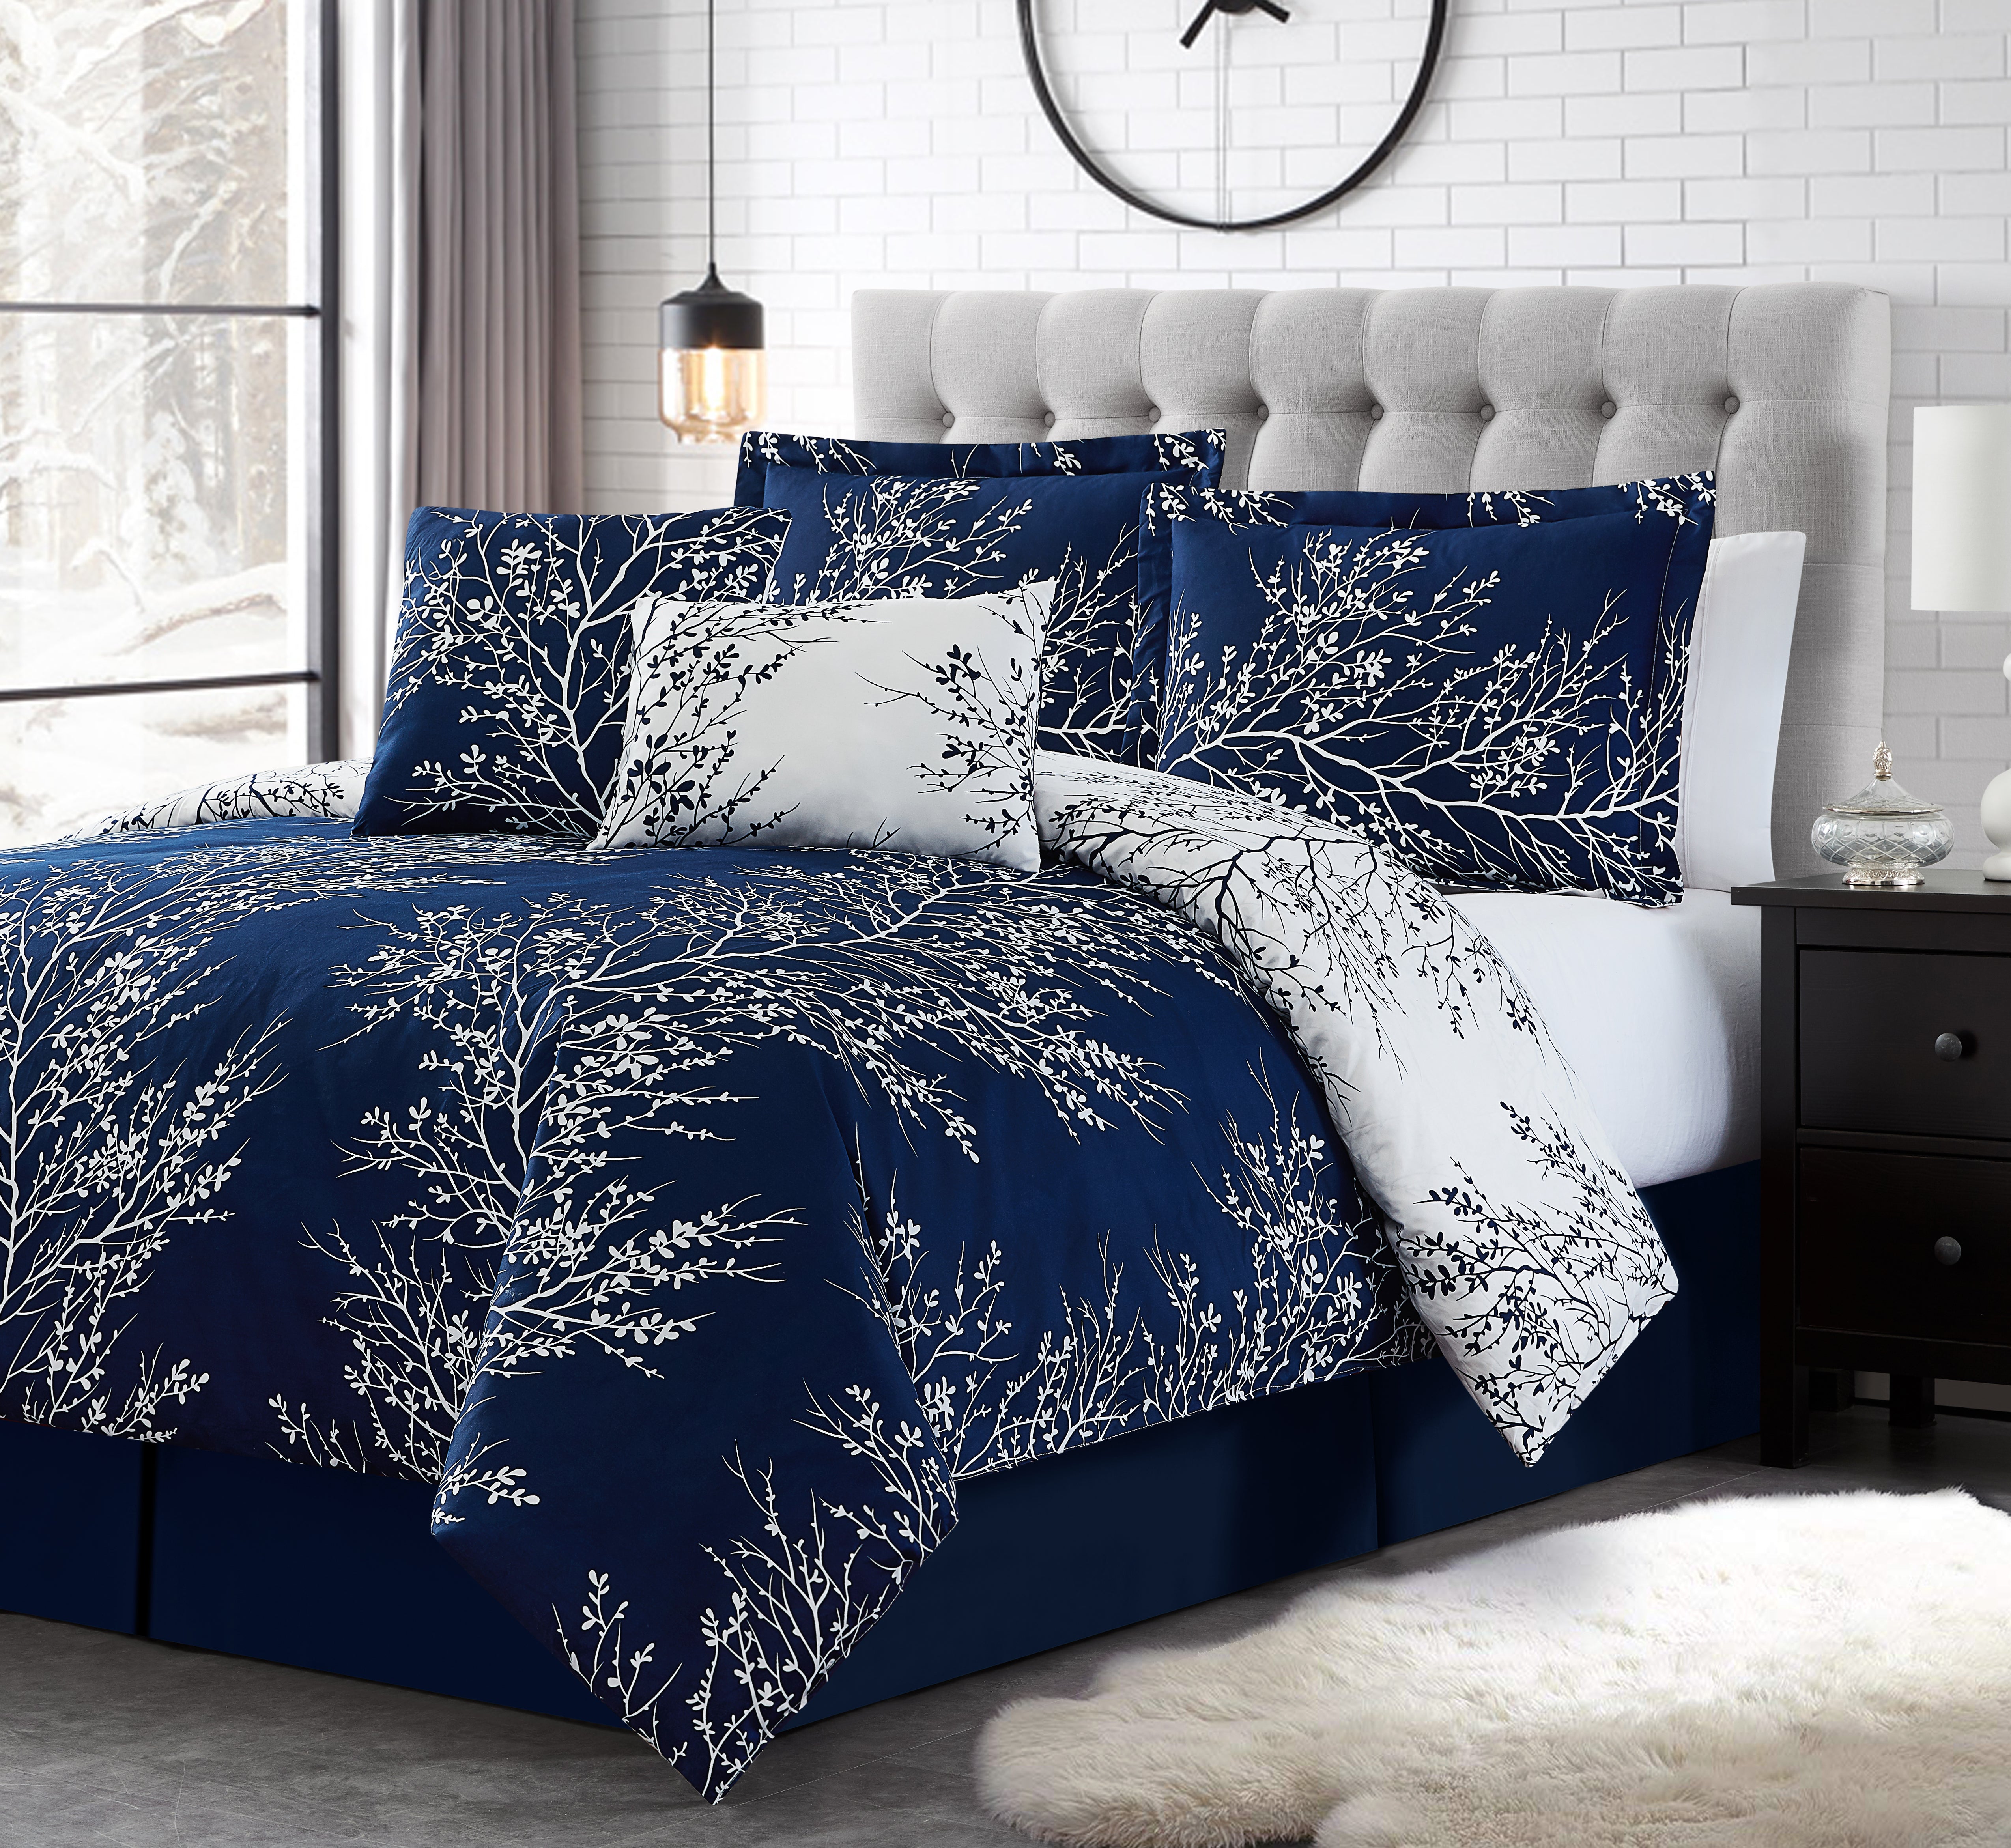 Foliage Reversible Comforter Set + Two Free Sham Pillows - Spirit Linen - Navy